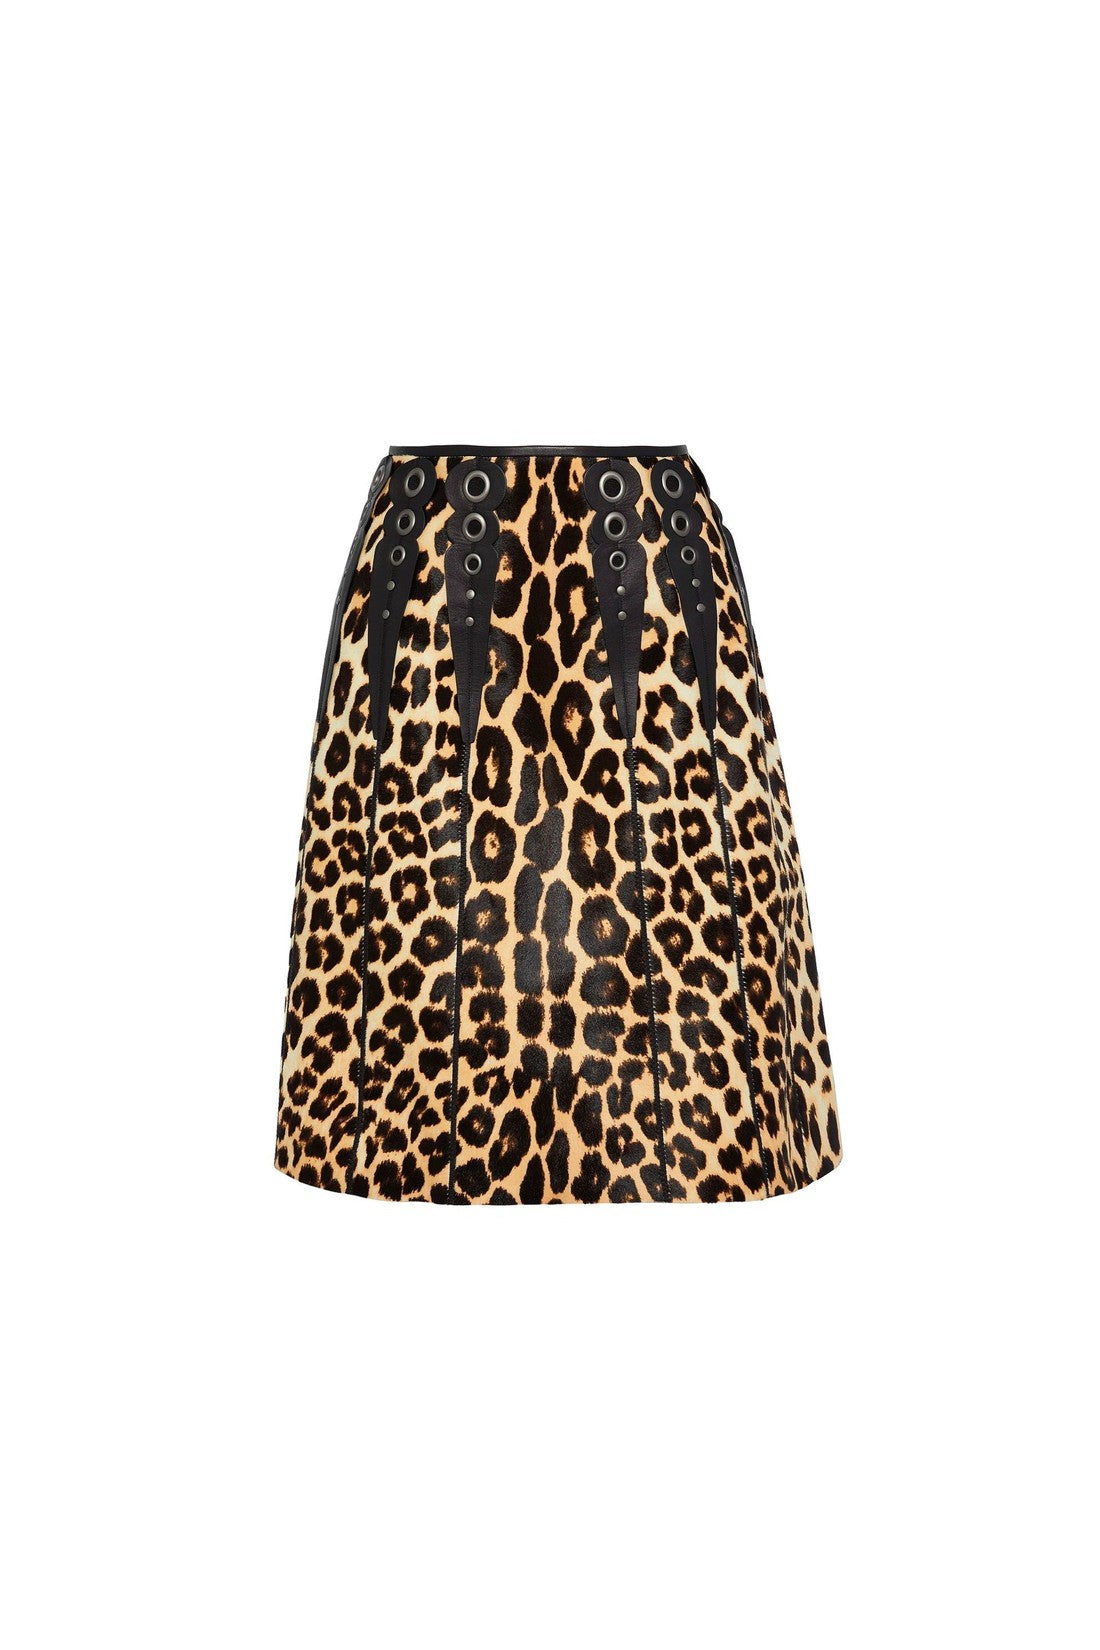 BOTTEGA VENETA-Bottega Veneta Leopard Print Calf Hair Skirt-WOMEN CLOTHING-Outlet-Sale